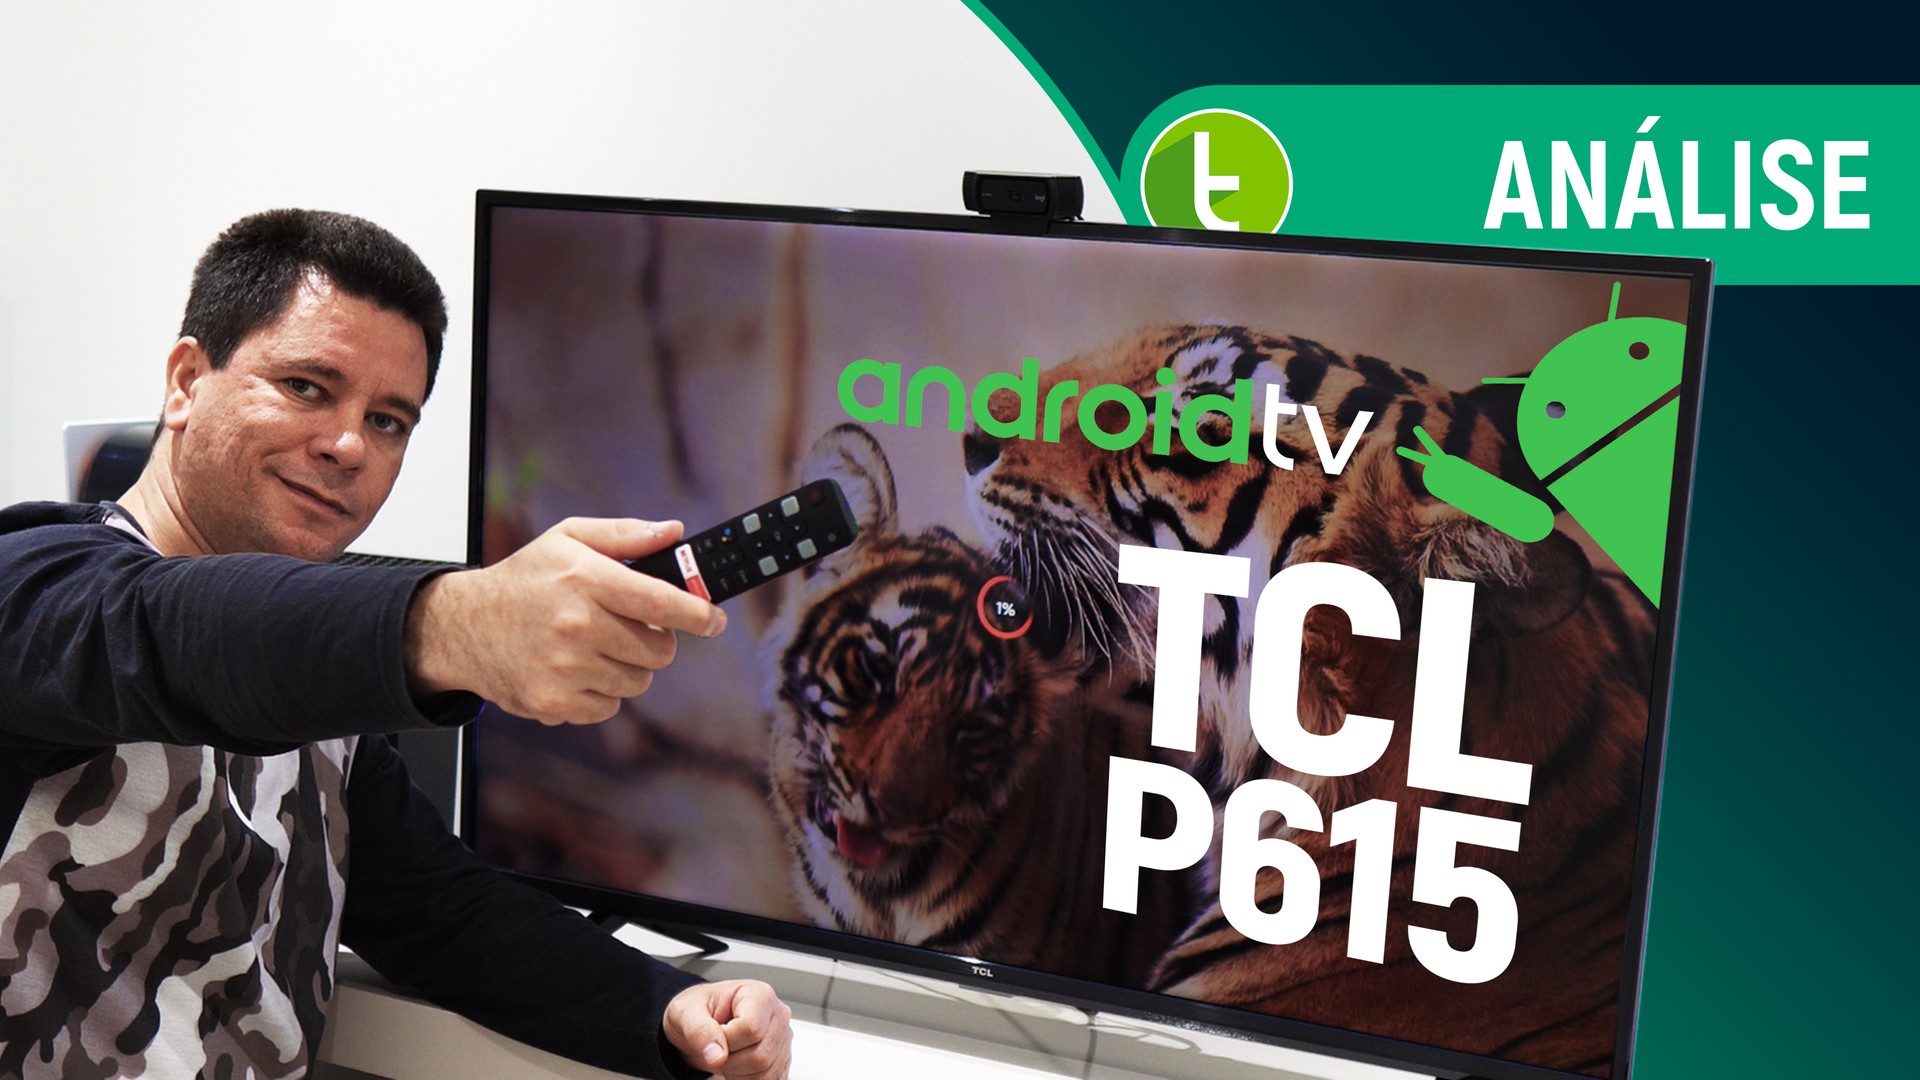 xCloud - Como Jogar Jogos de Xbox na SmartTV TCL com Android TV